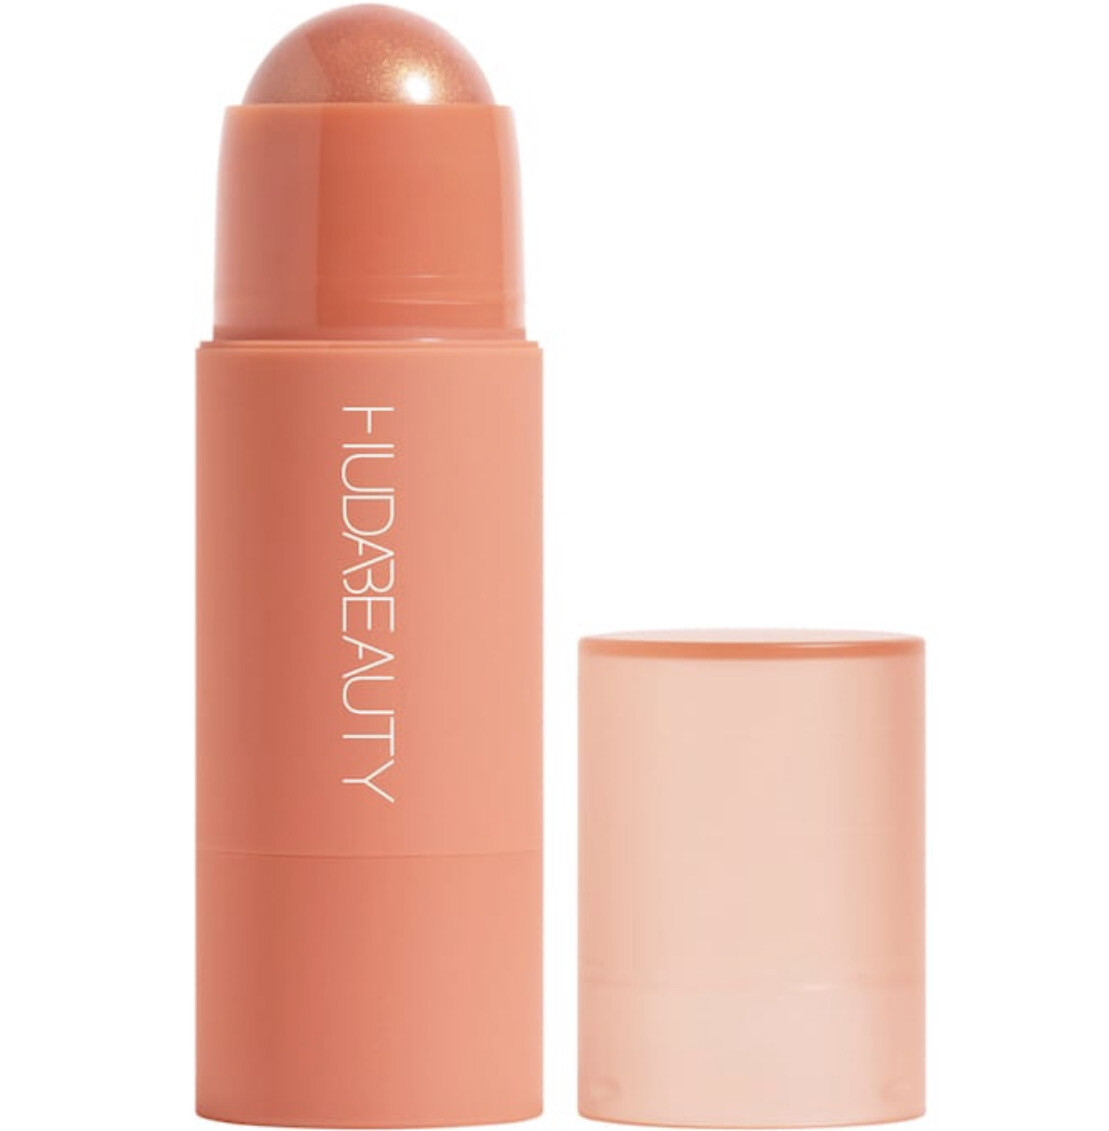 Huda Beauty - Cheeky Tint Cream Blush Stick | Perky Peach - a warm dusty peach